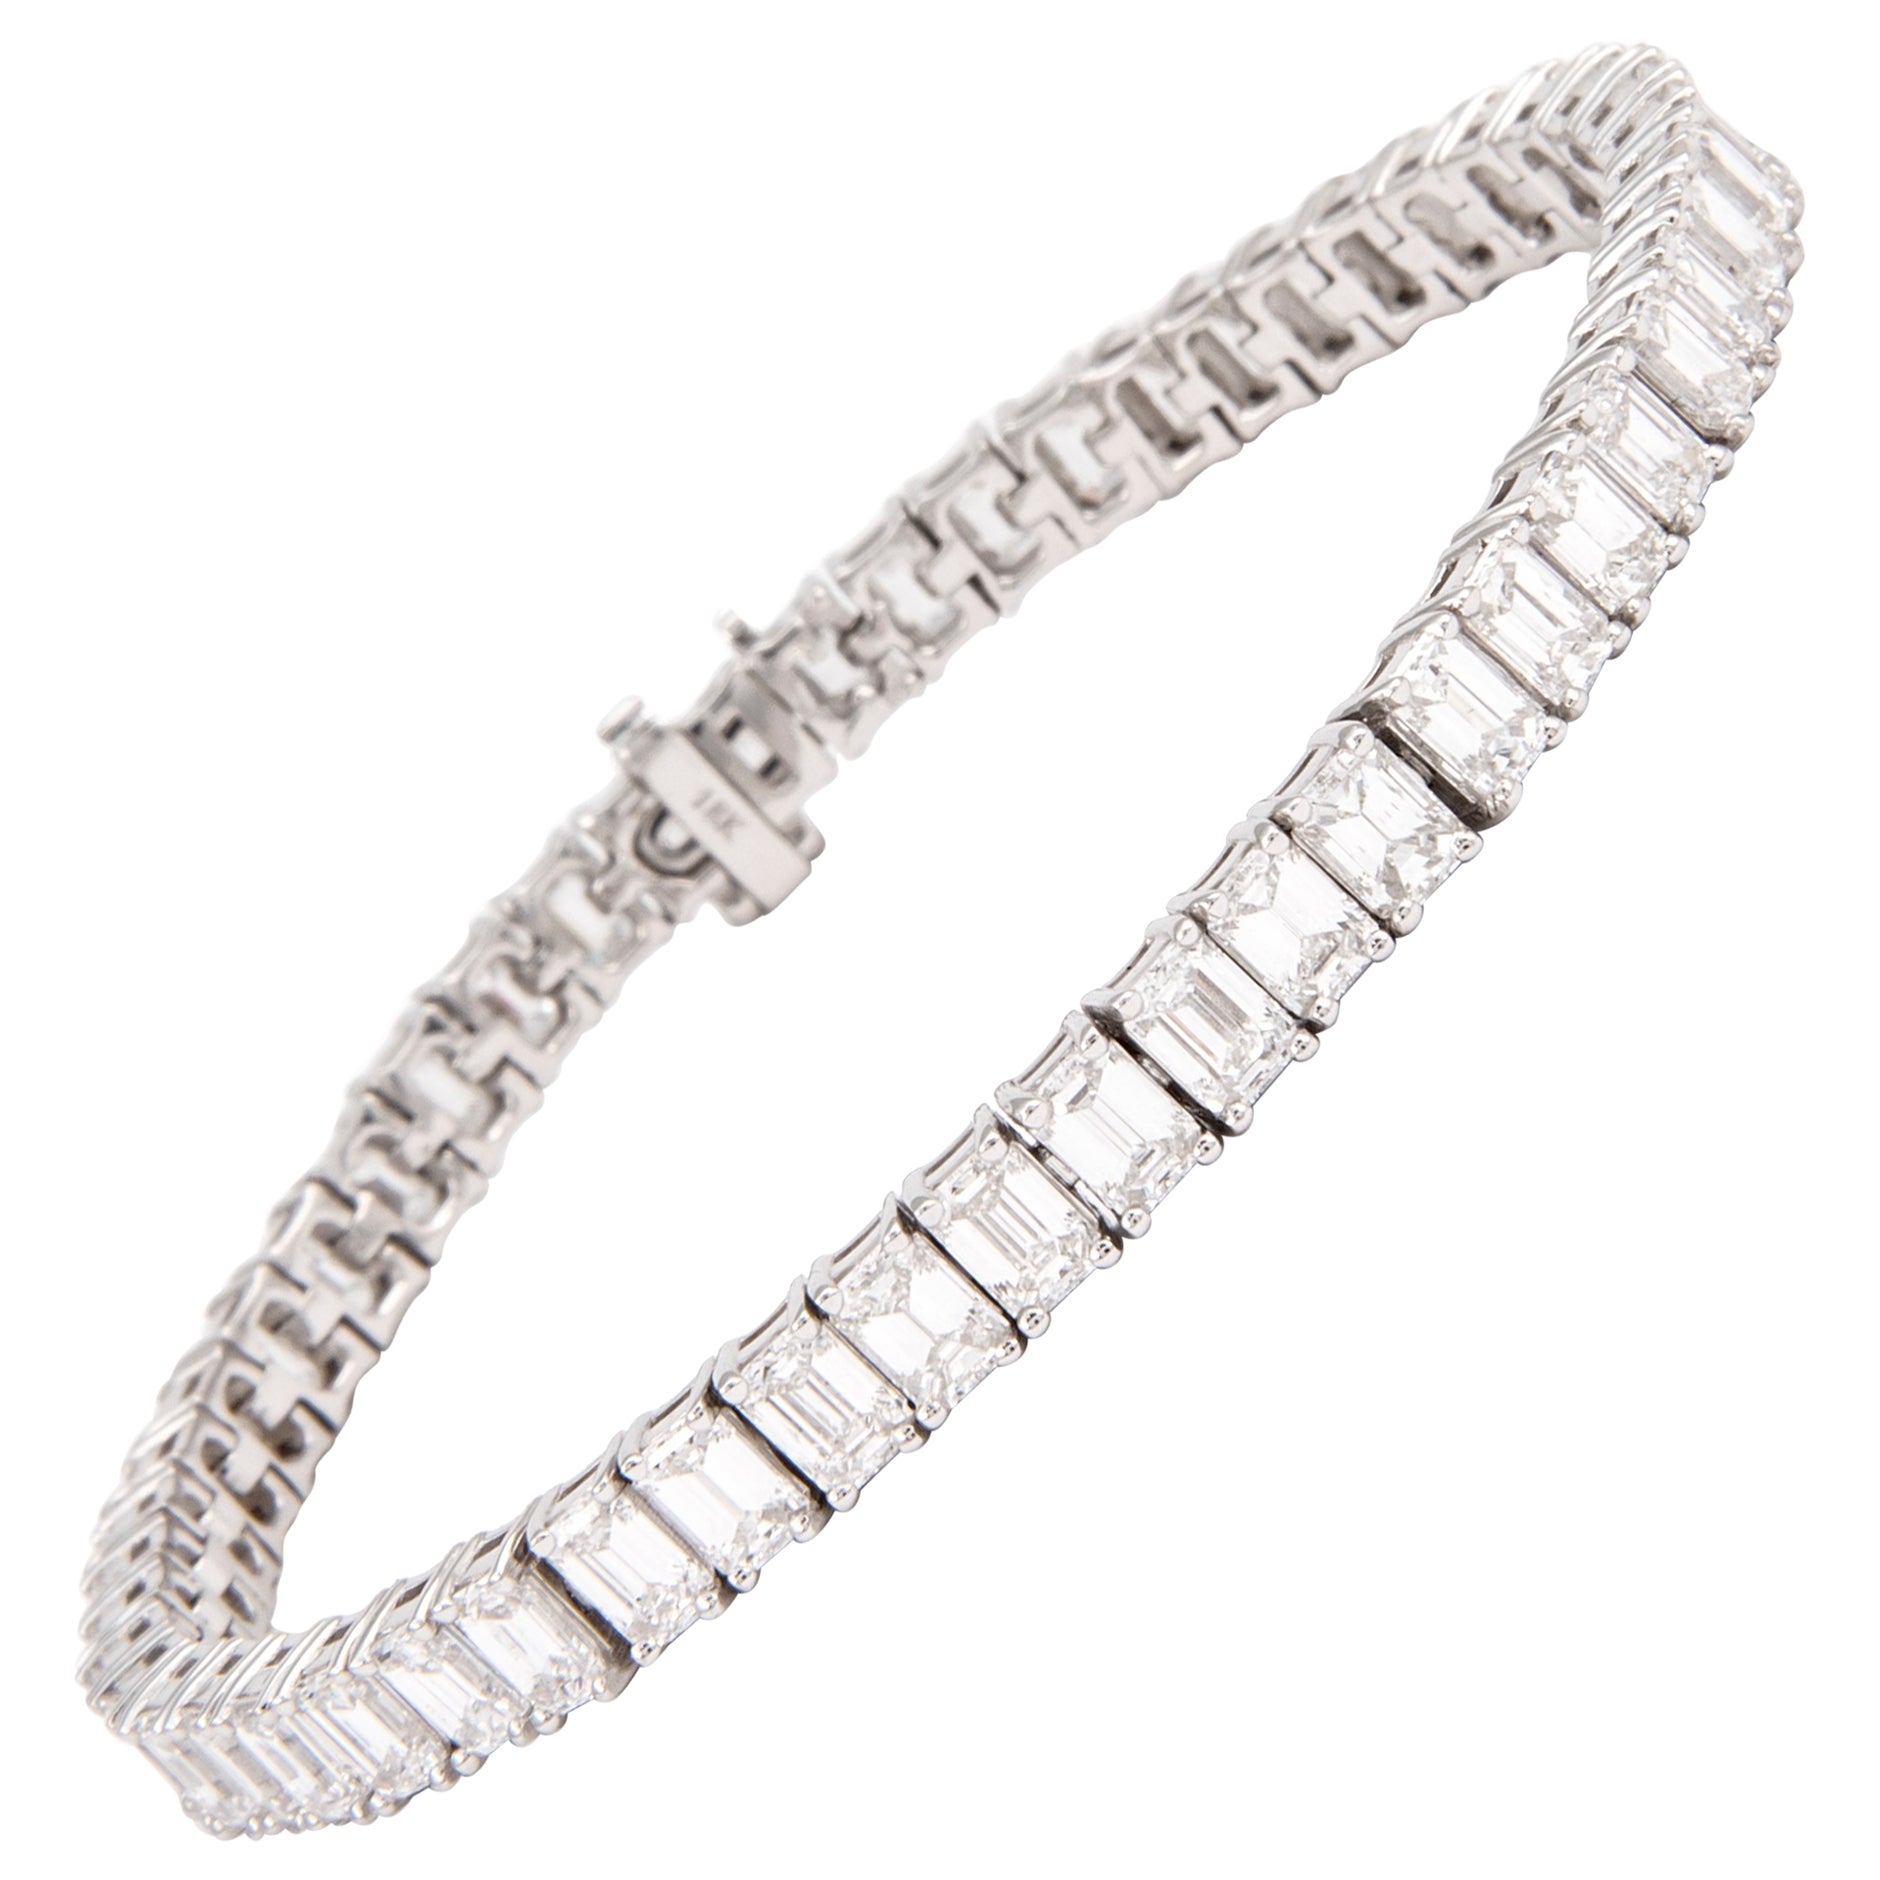 Alexander 12.65 Carat Emerald Cut Diamond Tennis Bracelet 18-Karat White Gold